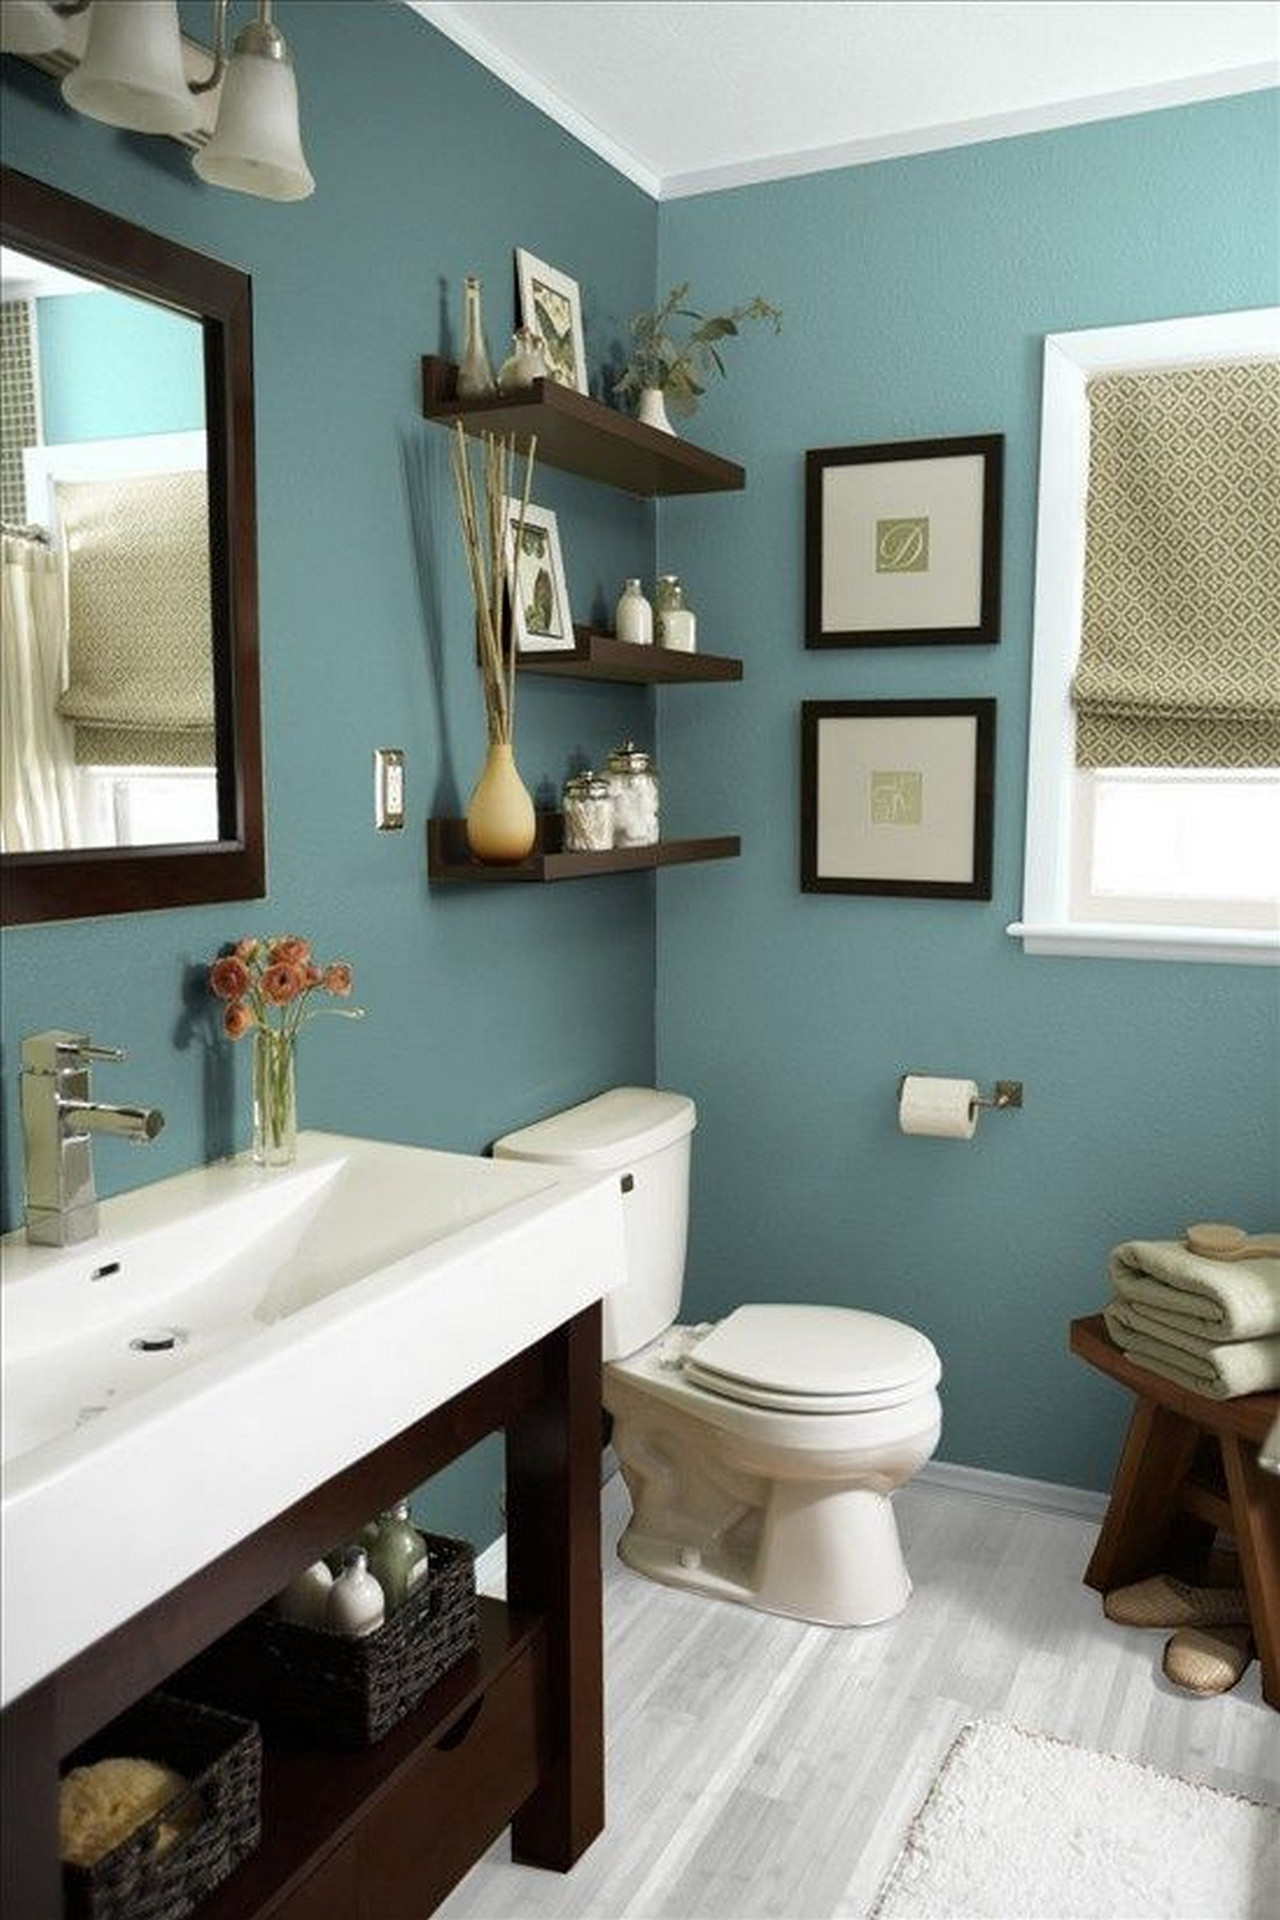 Best ideas about Bathroom Decoration Ideas
. Save or Pin 25 Best Bathroom Decor Ideas and Designs for 2019 Now.